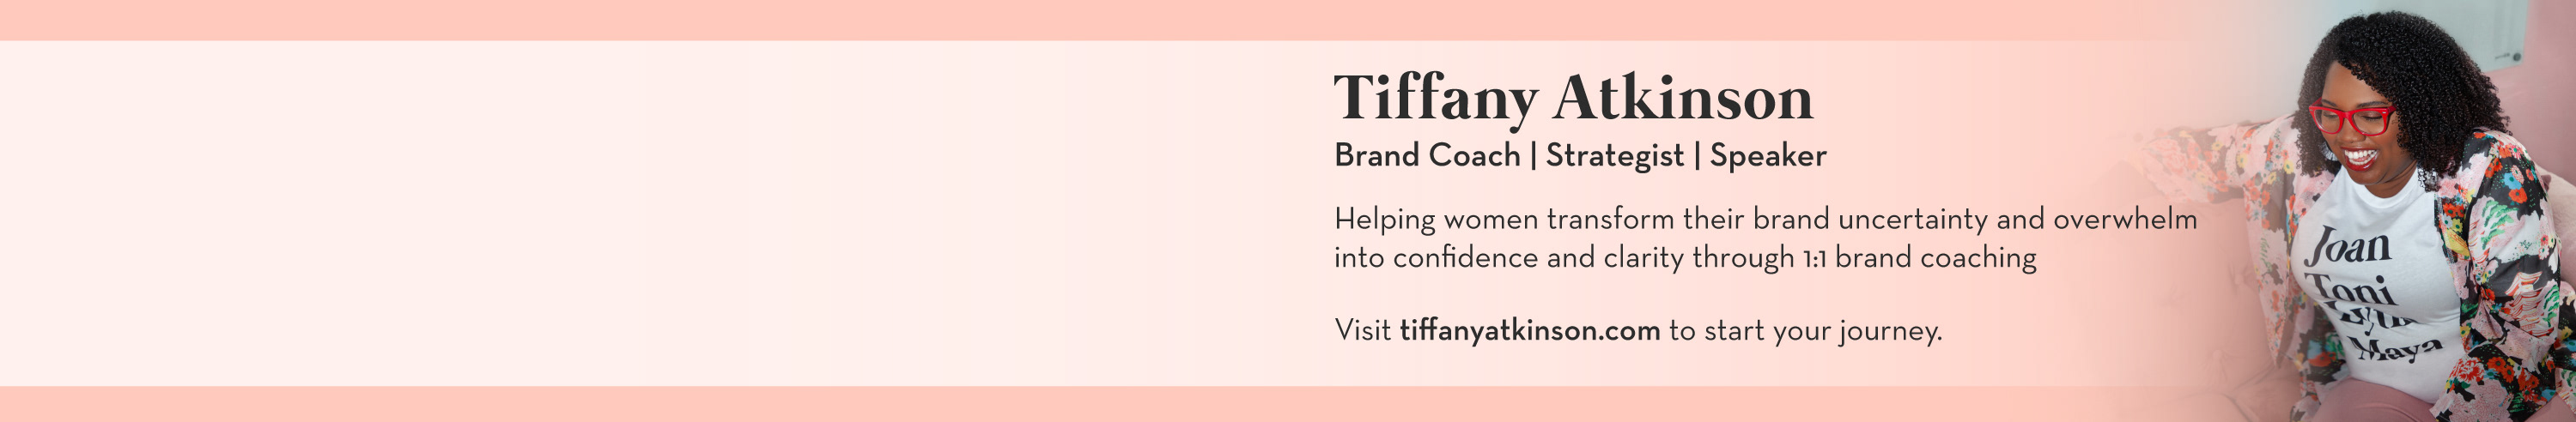 Tiffany Atkinson's profile banner